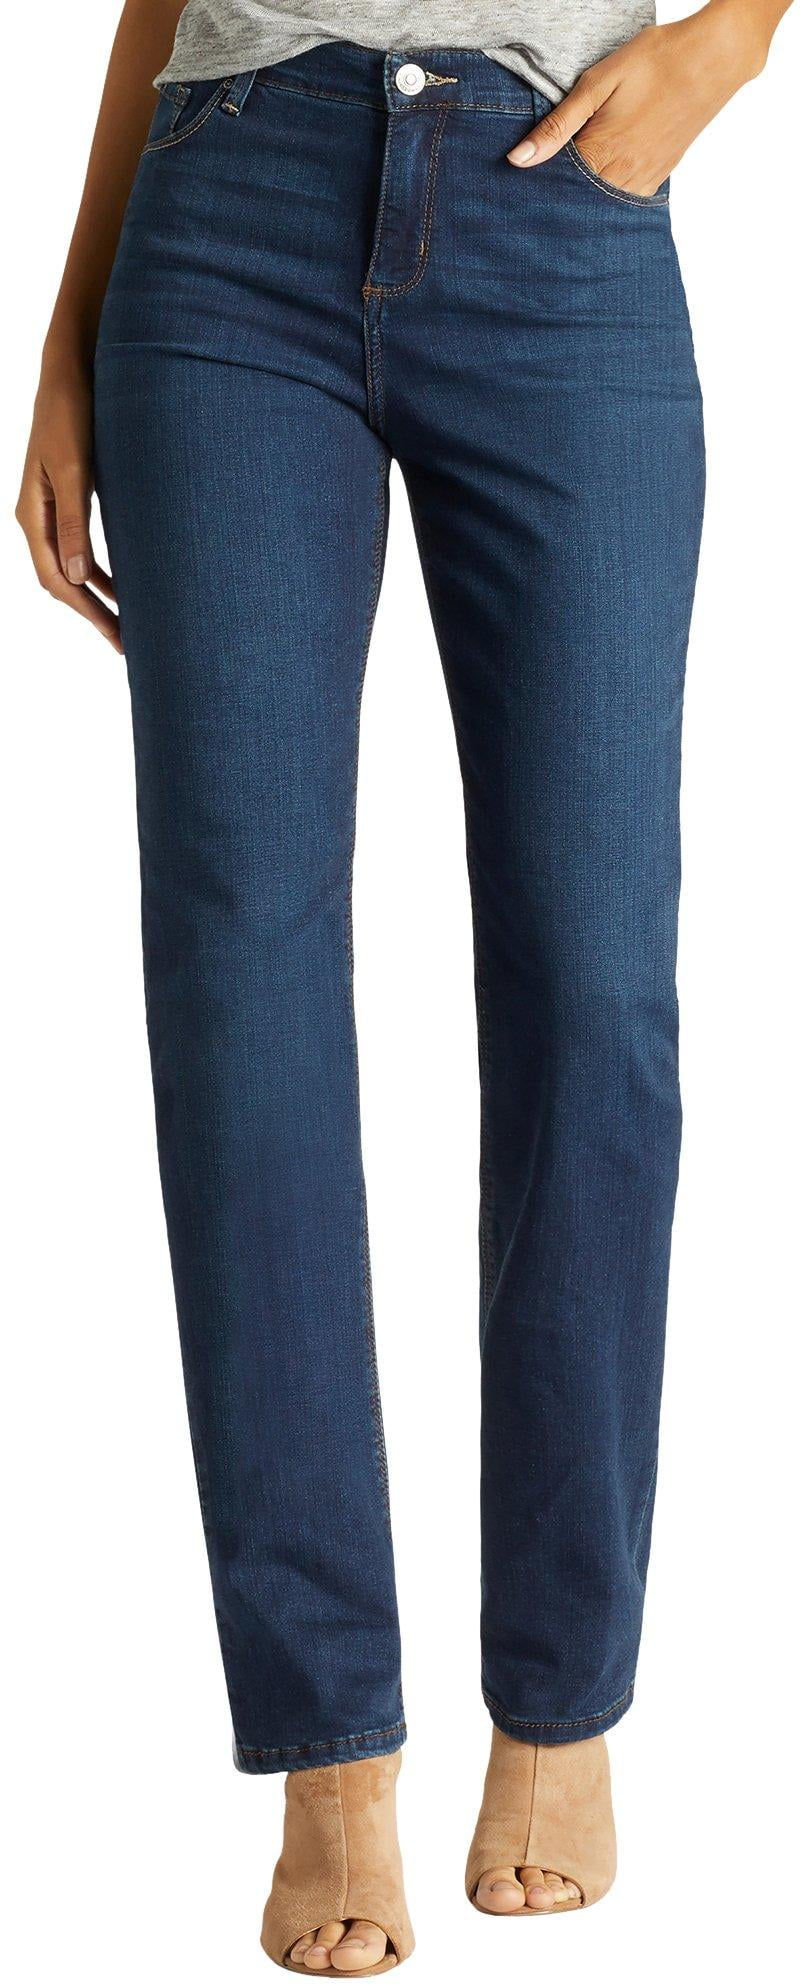 Lee Petite Relaxed Straight Leg Slim Fit Jeans 8P Black - Walmart.com